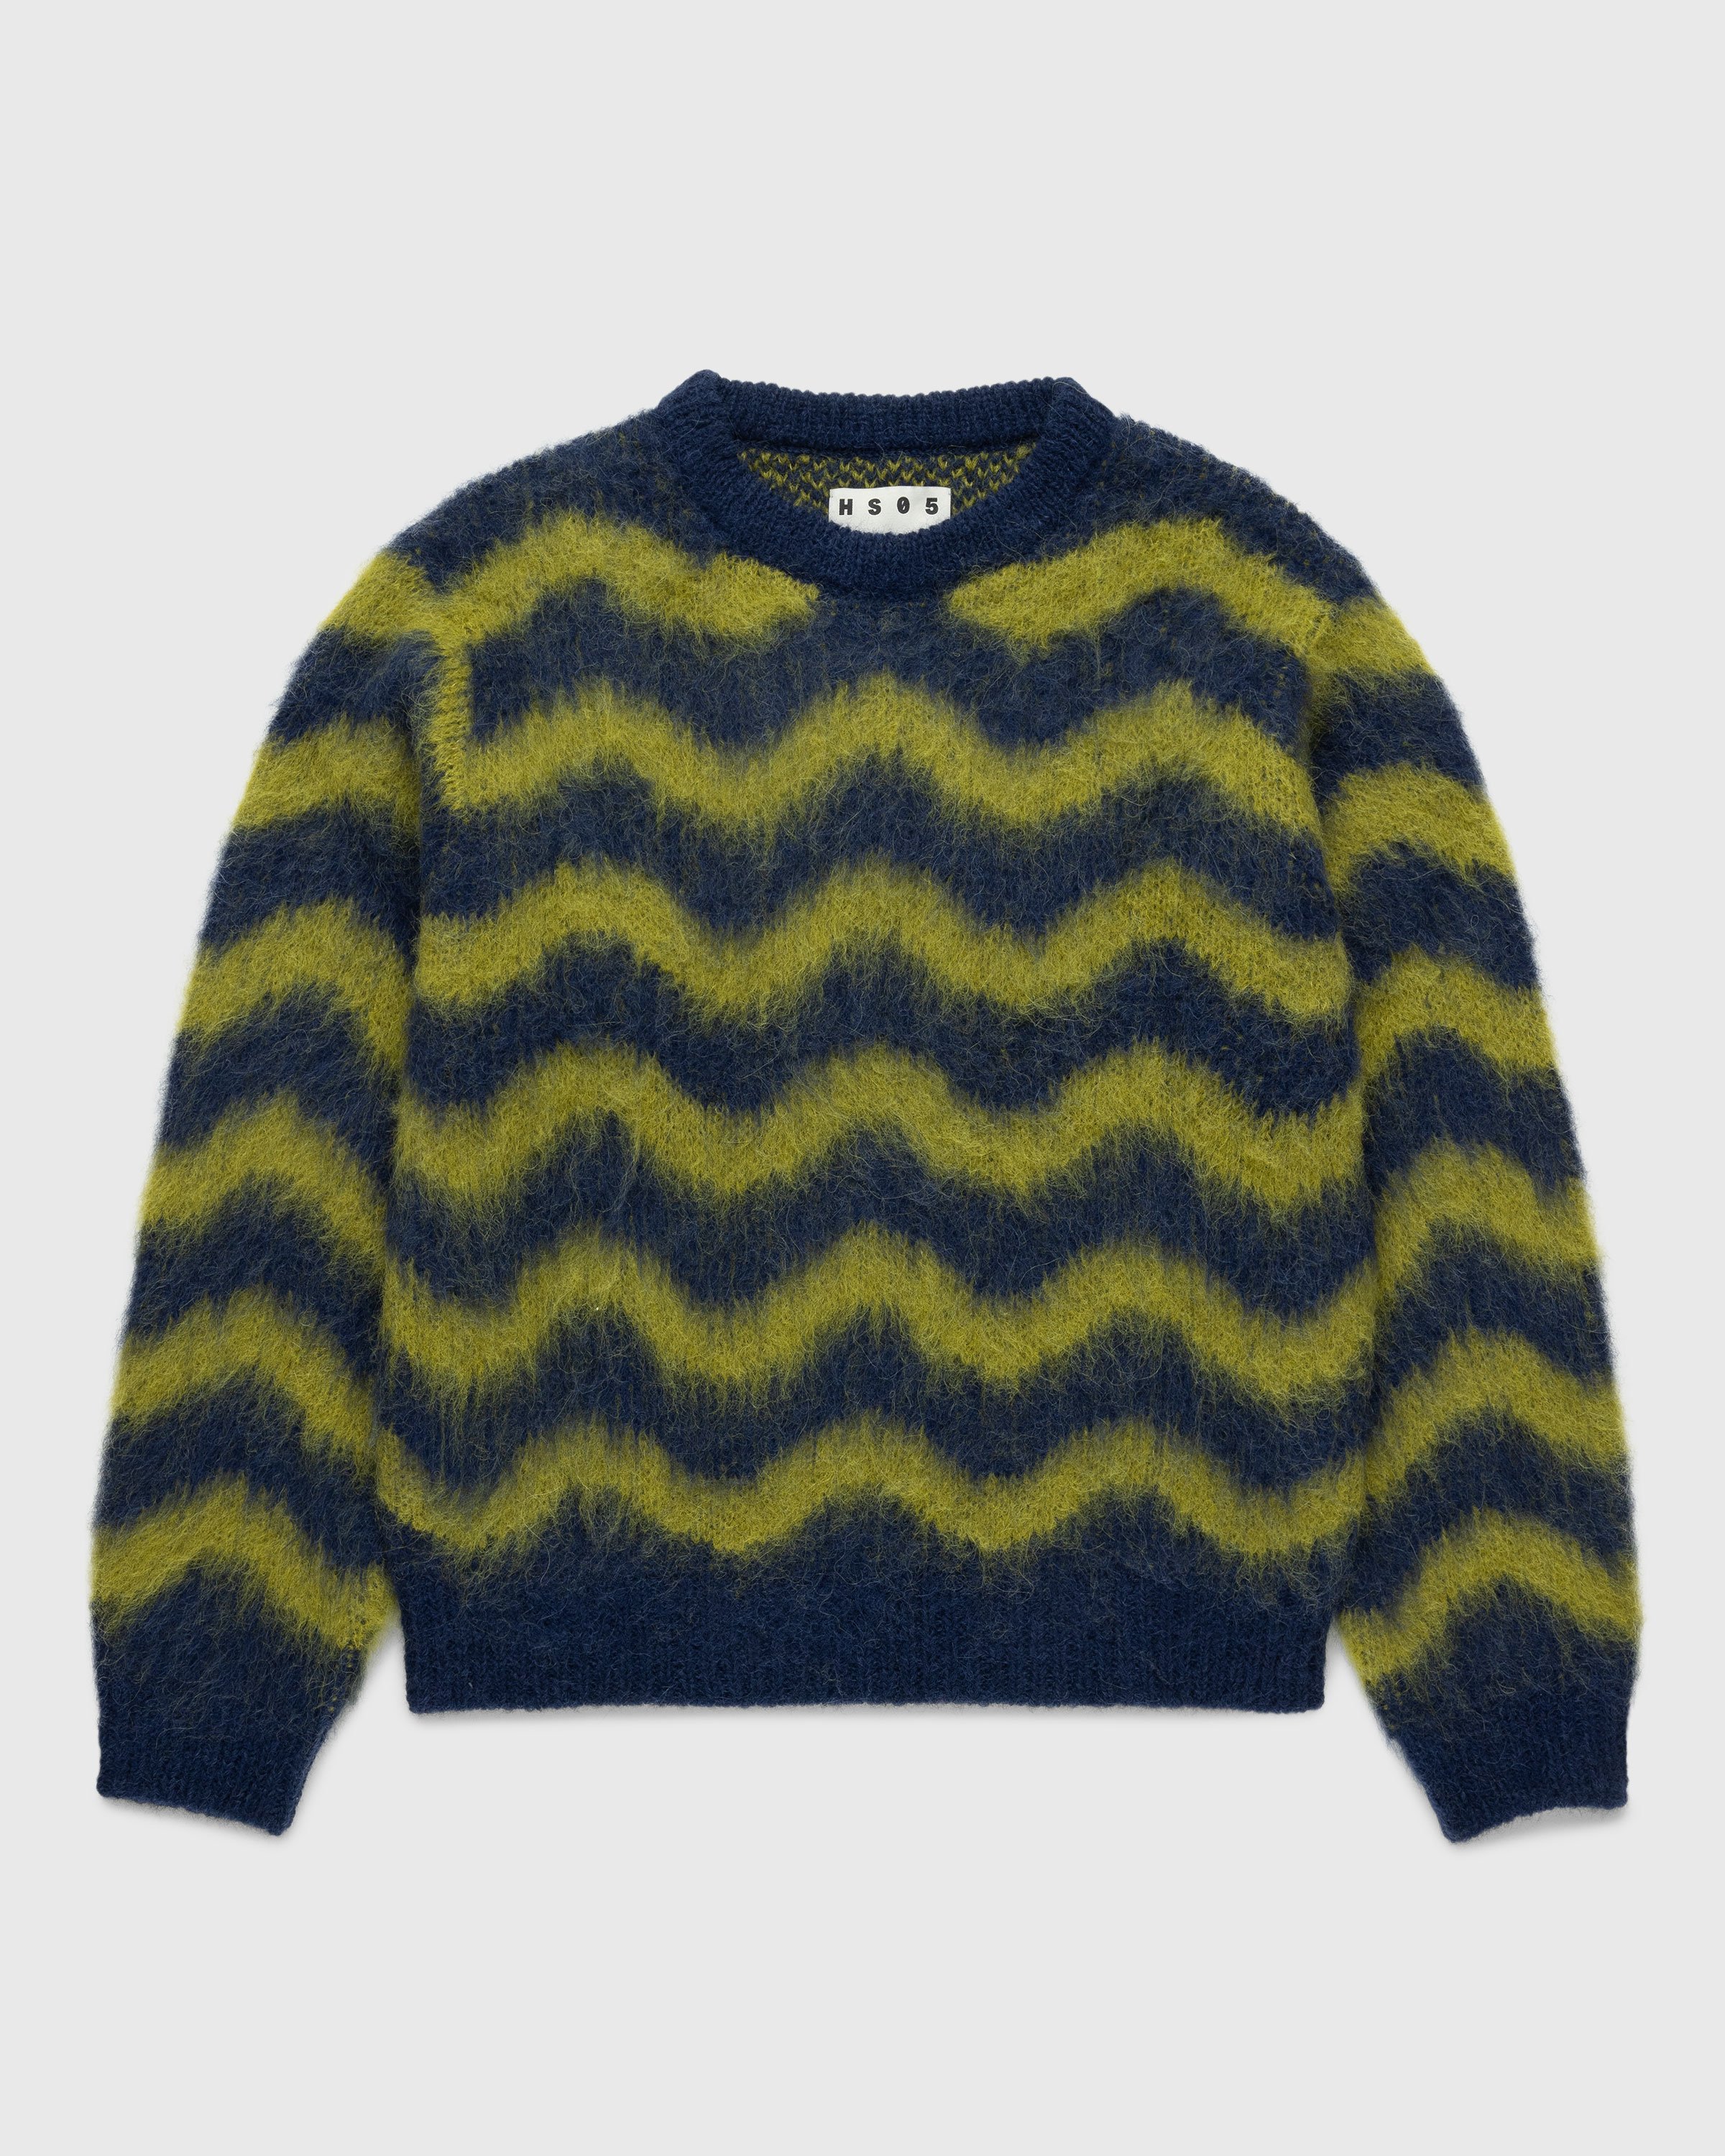 Highsnobiety HS05 - Alpaca Fuzzy Wave Sweater Navy/Olive green - Clothing - Multi - Image 1